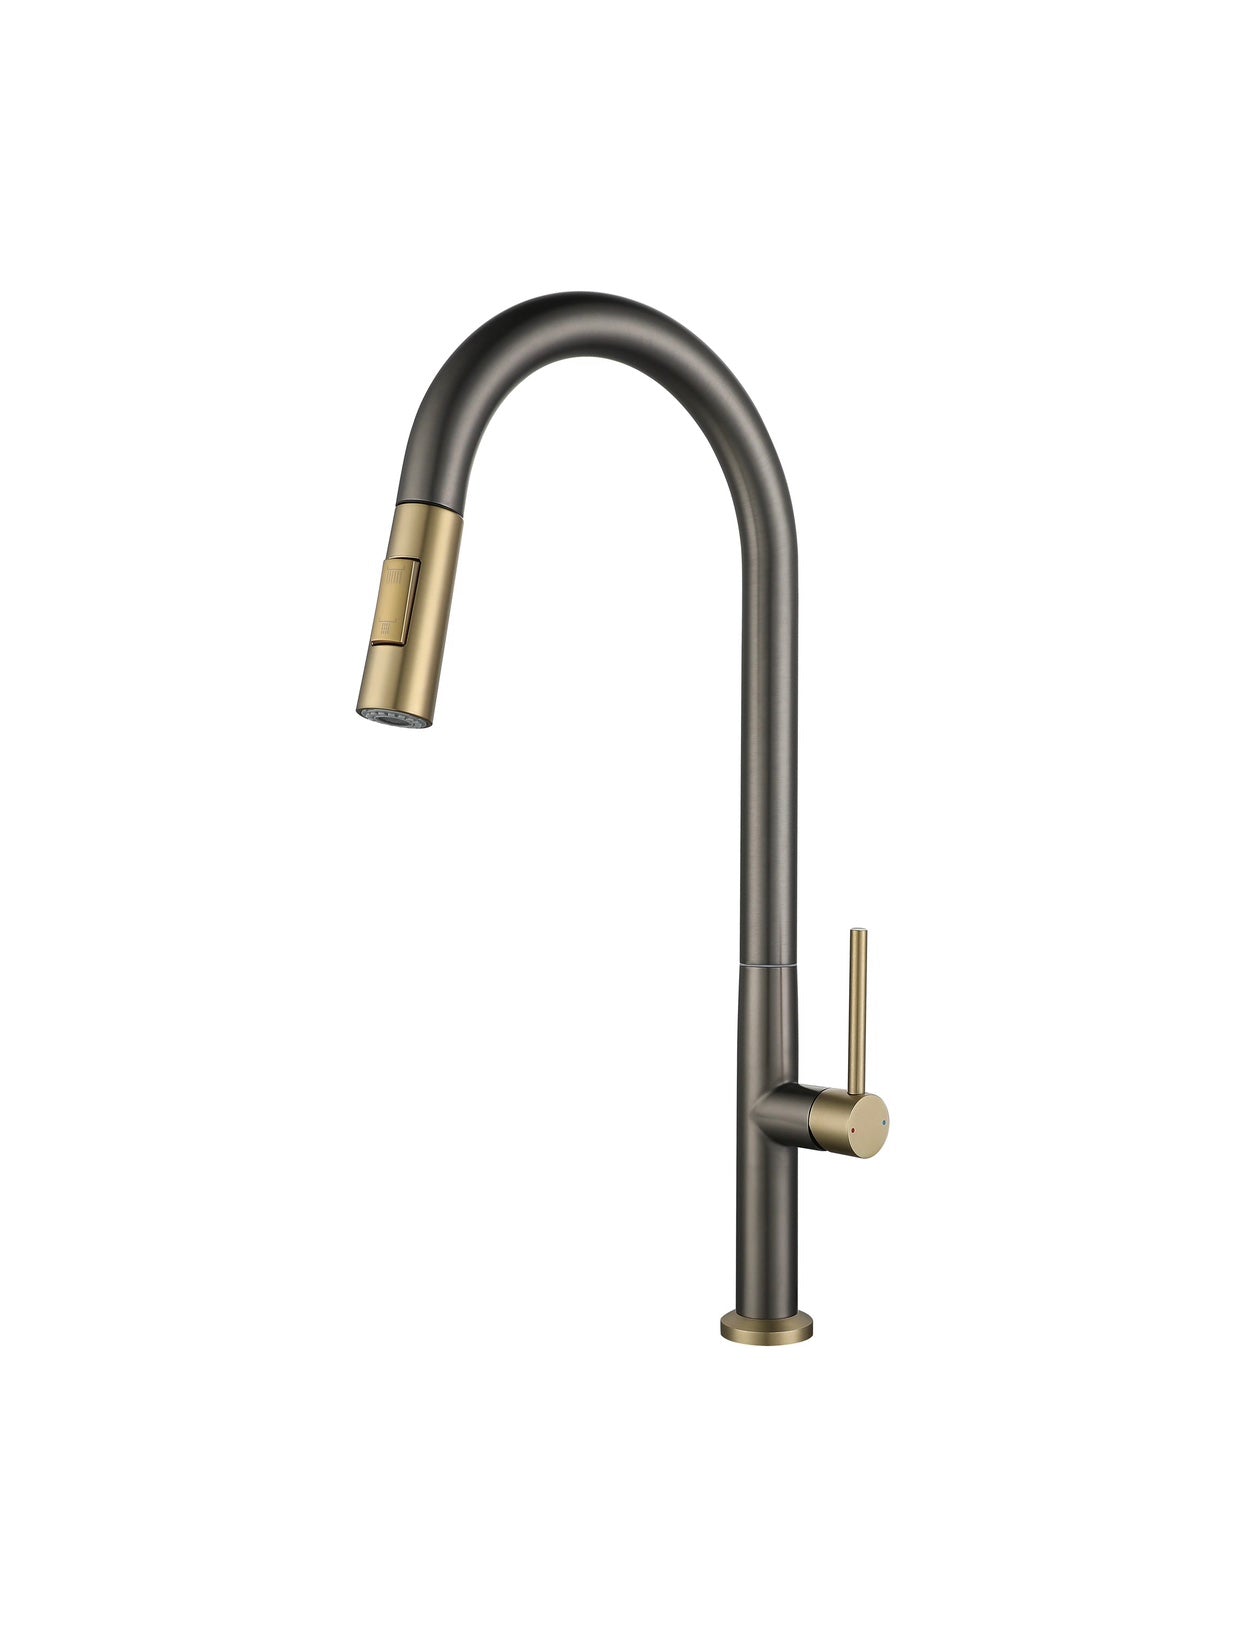 A|M Aquae Luxury 360 degree swivel spout kitchen sink faucet steel single handle pull down kitchen faucet